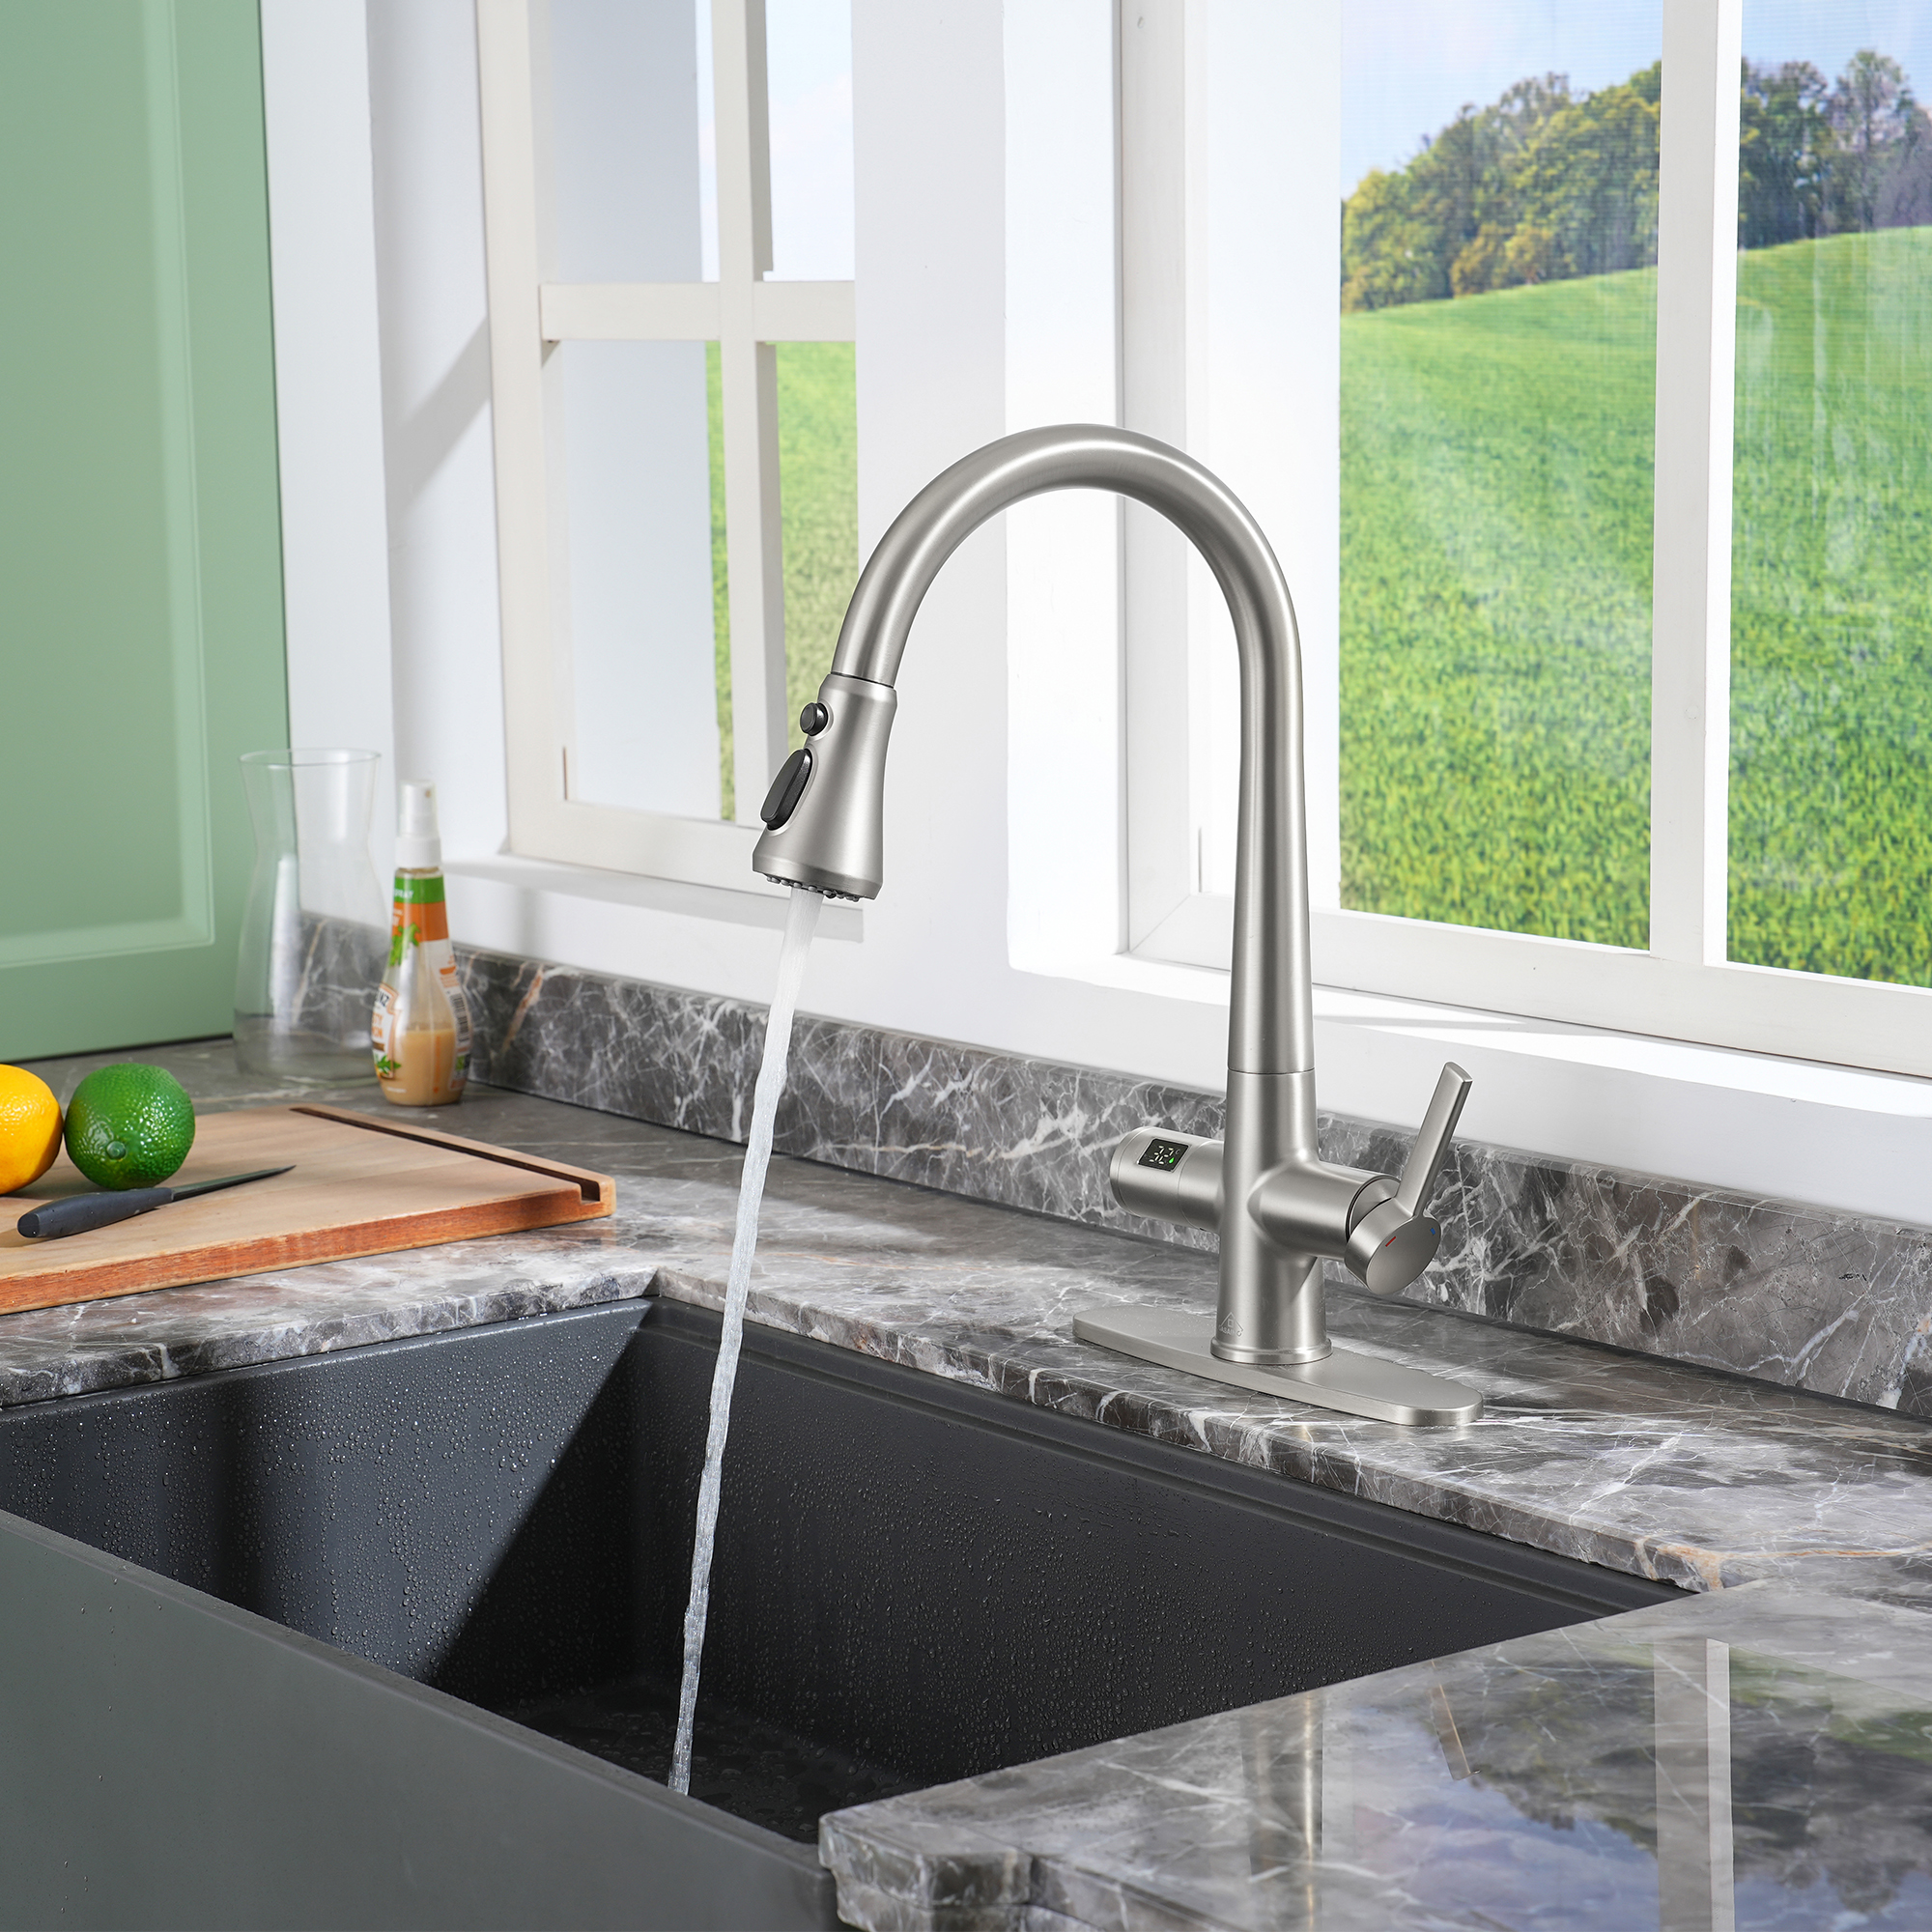 Upgrade Your Kitchen with CASAINC Sink Faucets - Elegance & Efficiency –  CASAINC